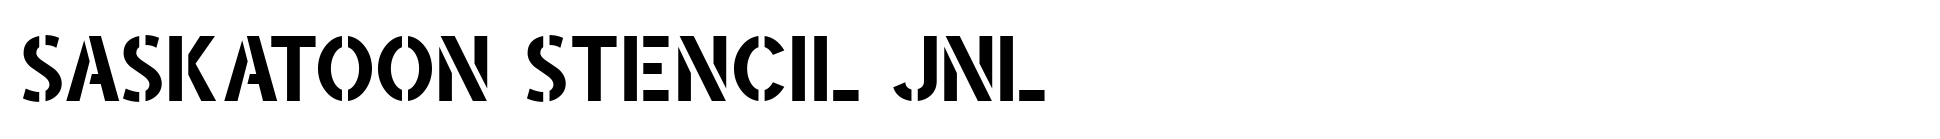 Saskatoon Stencil JNL